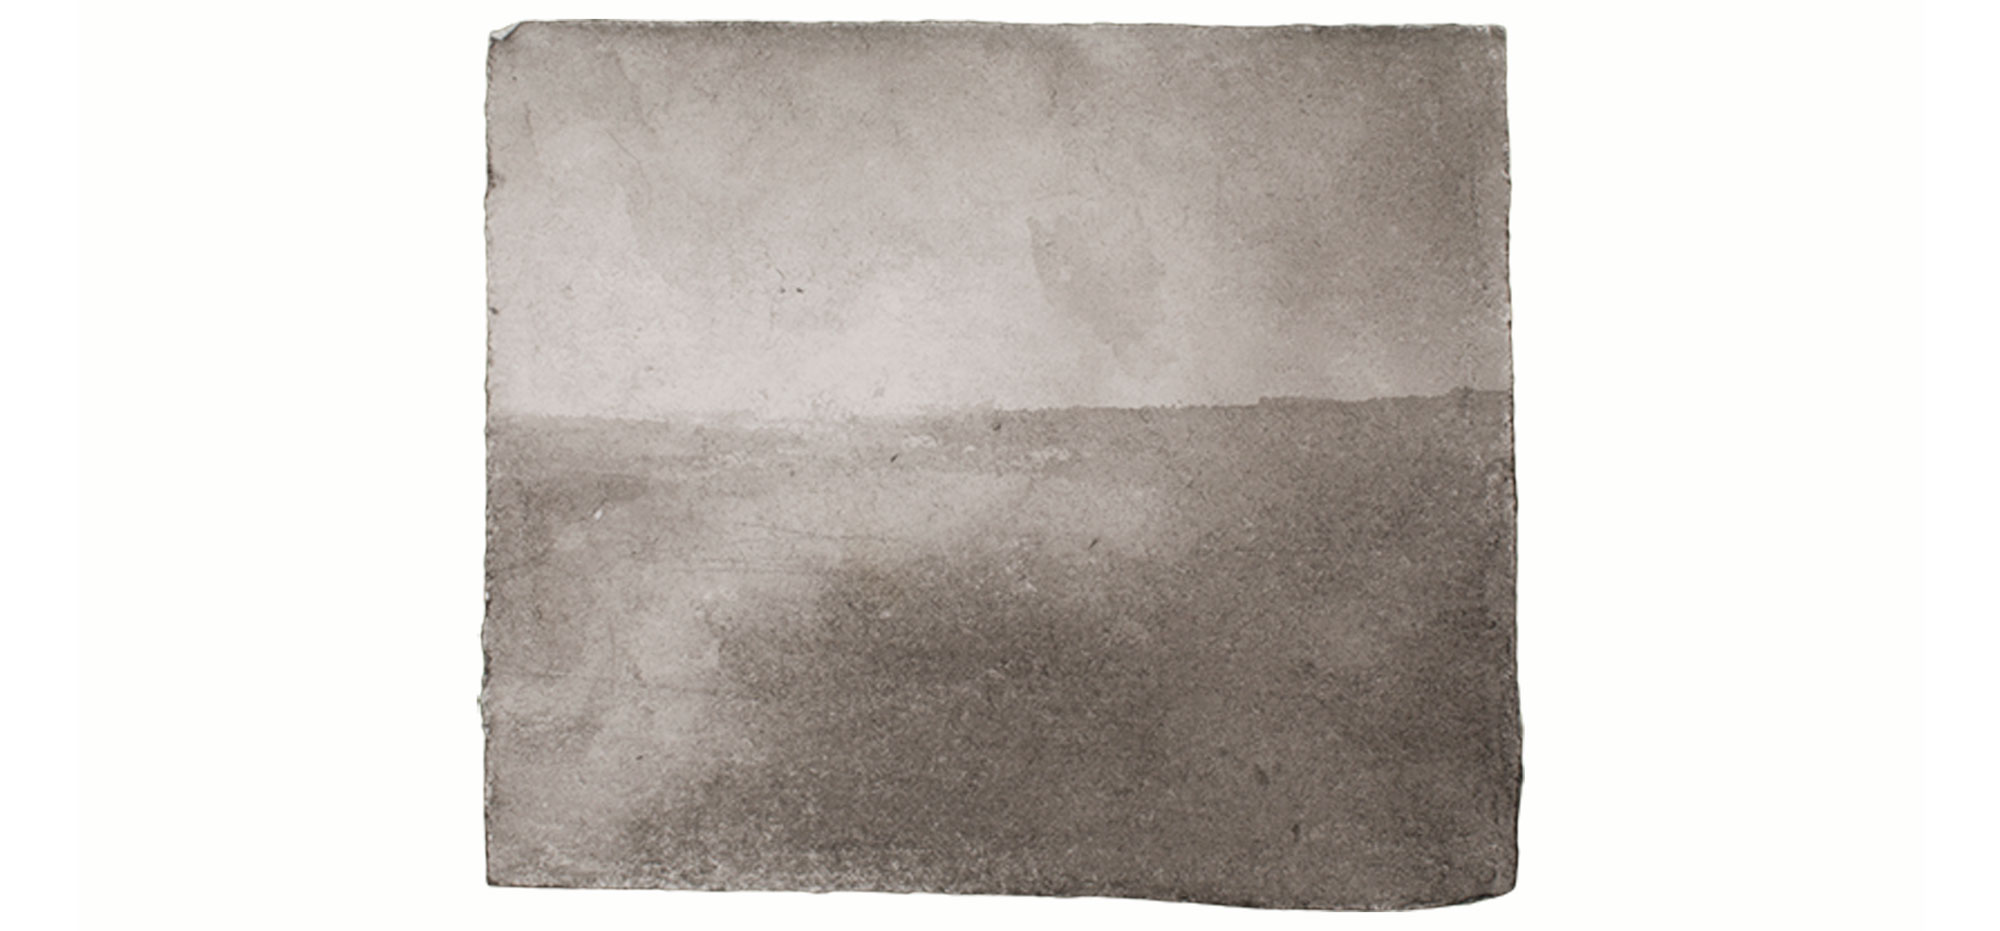   Sem Título, 2017. Nanquim   sobre   papel. 14 x 12 cm     Untitled, 2017. Ink on paper. 14 x 12 cm  